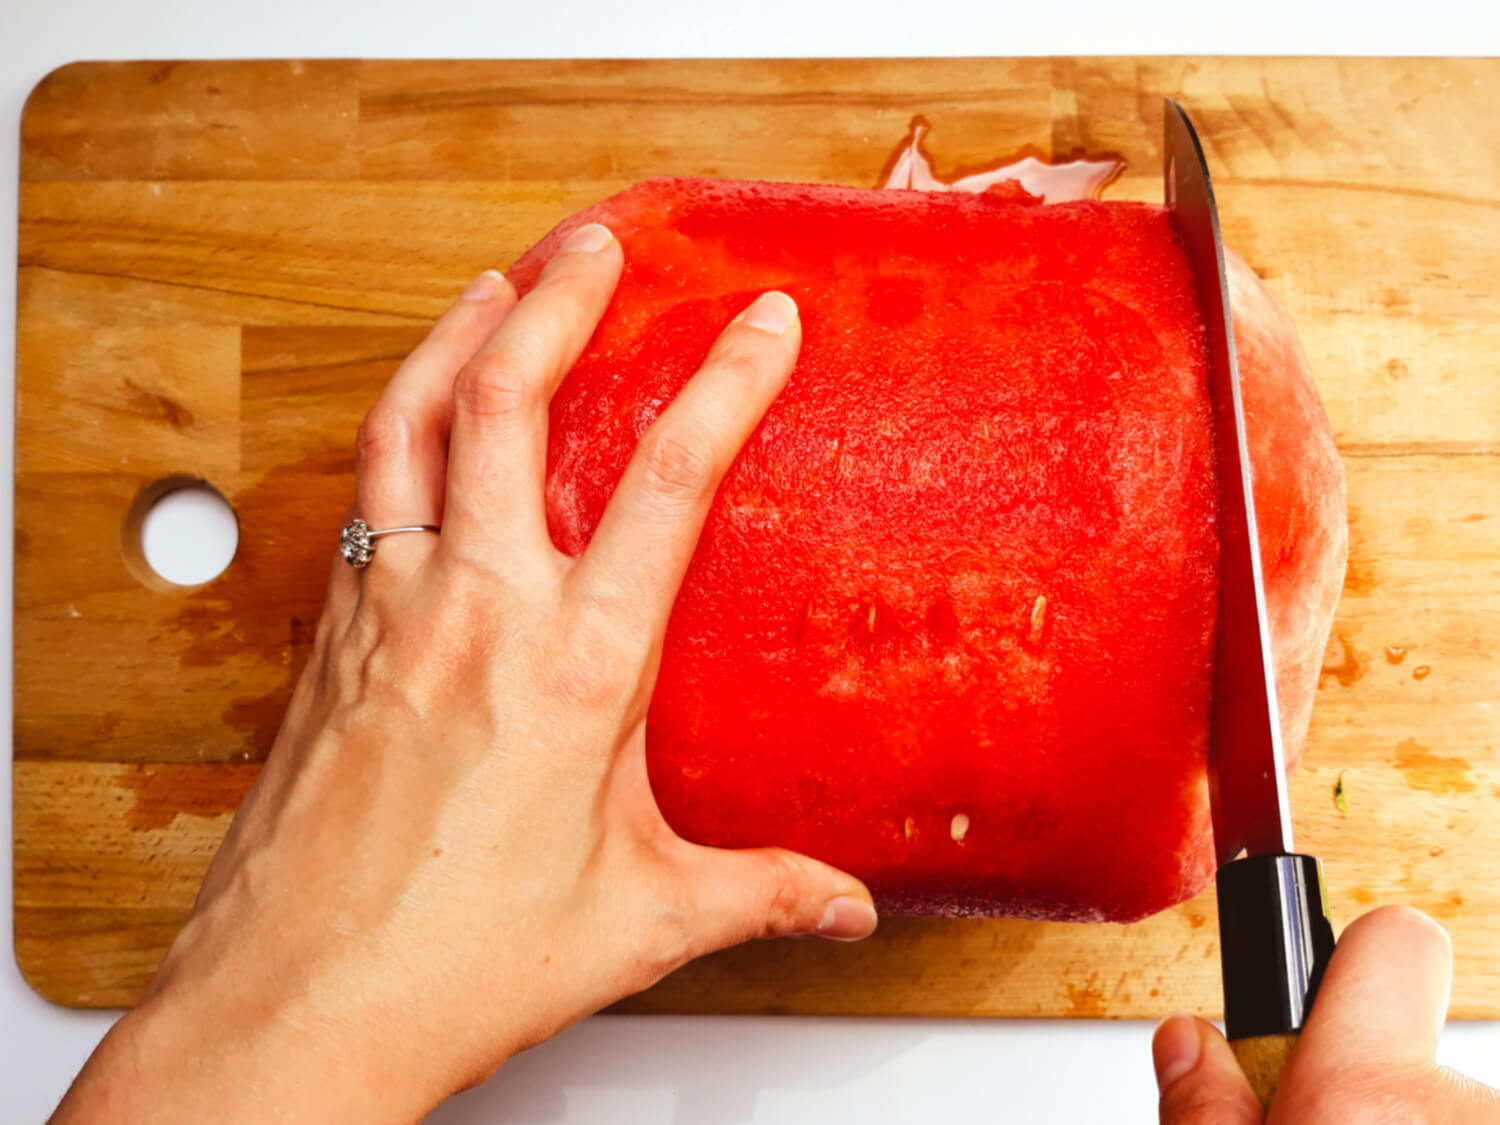 docinanie arbuza na kształt tortu, deska, nóż, arbuz